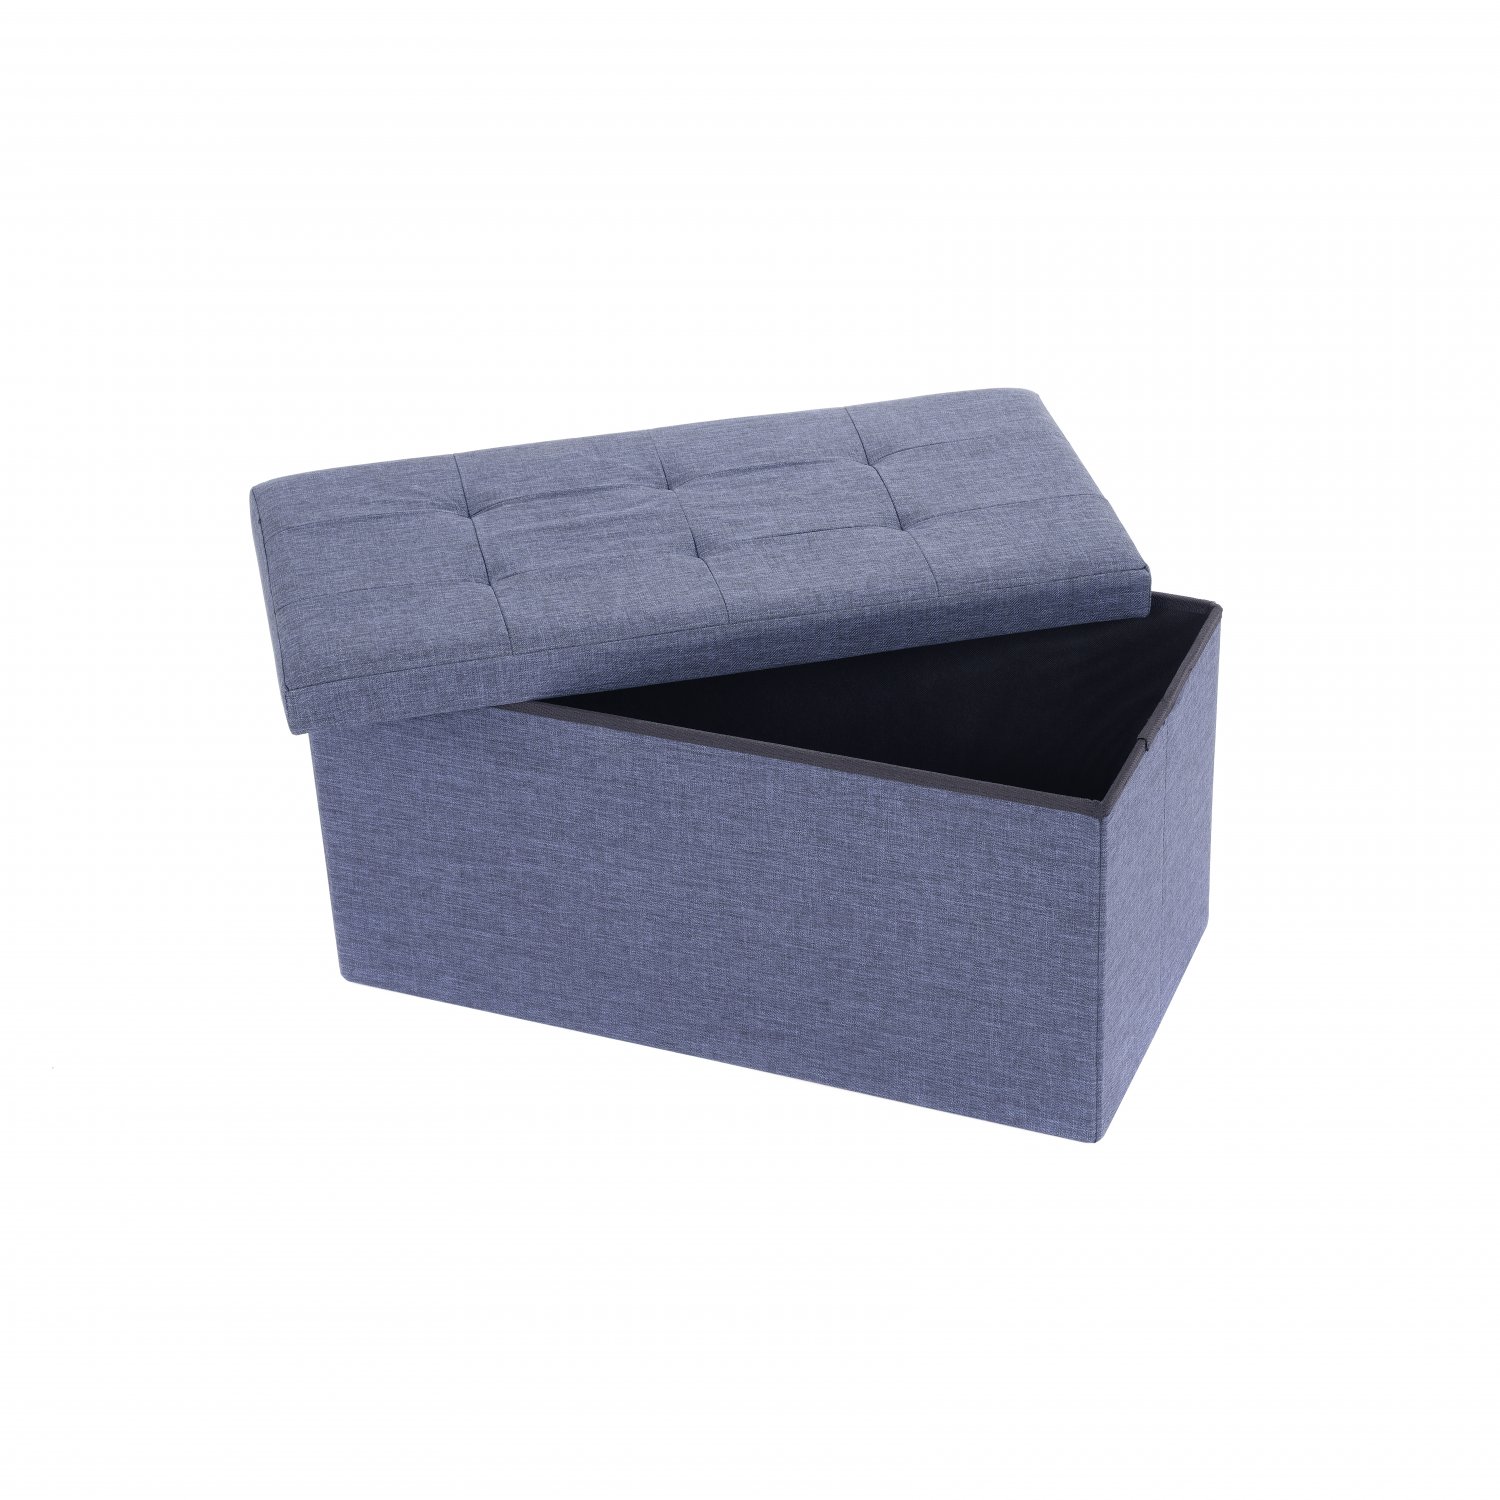 Medium Blue Linen Folding Ottoman Storage Chest Box Seat Bench